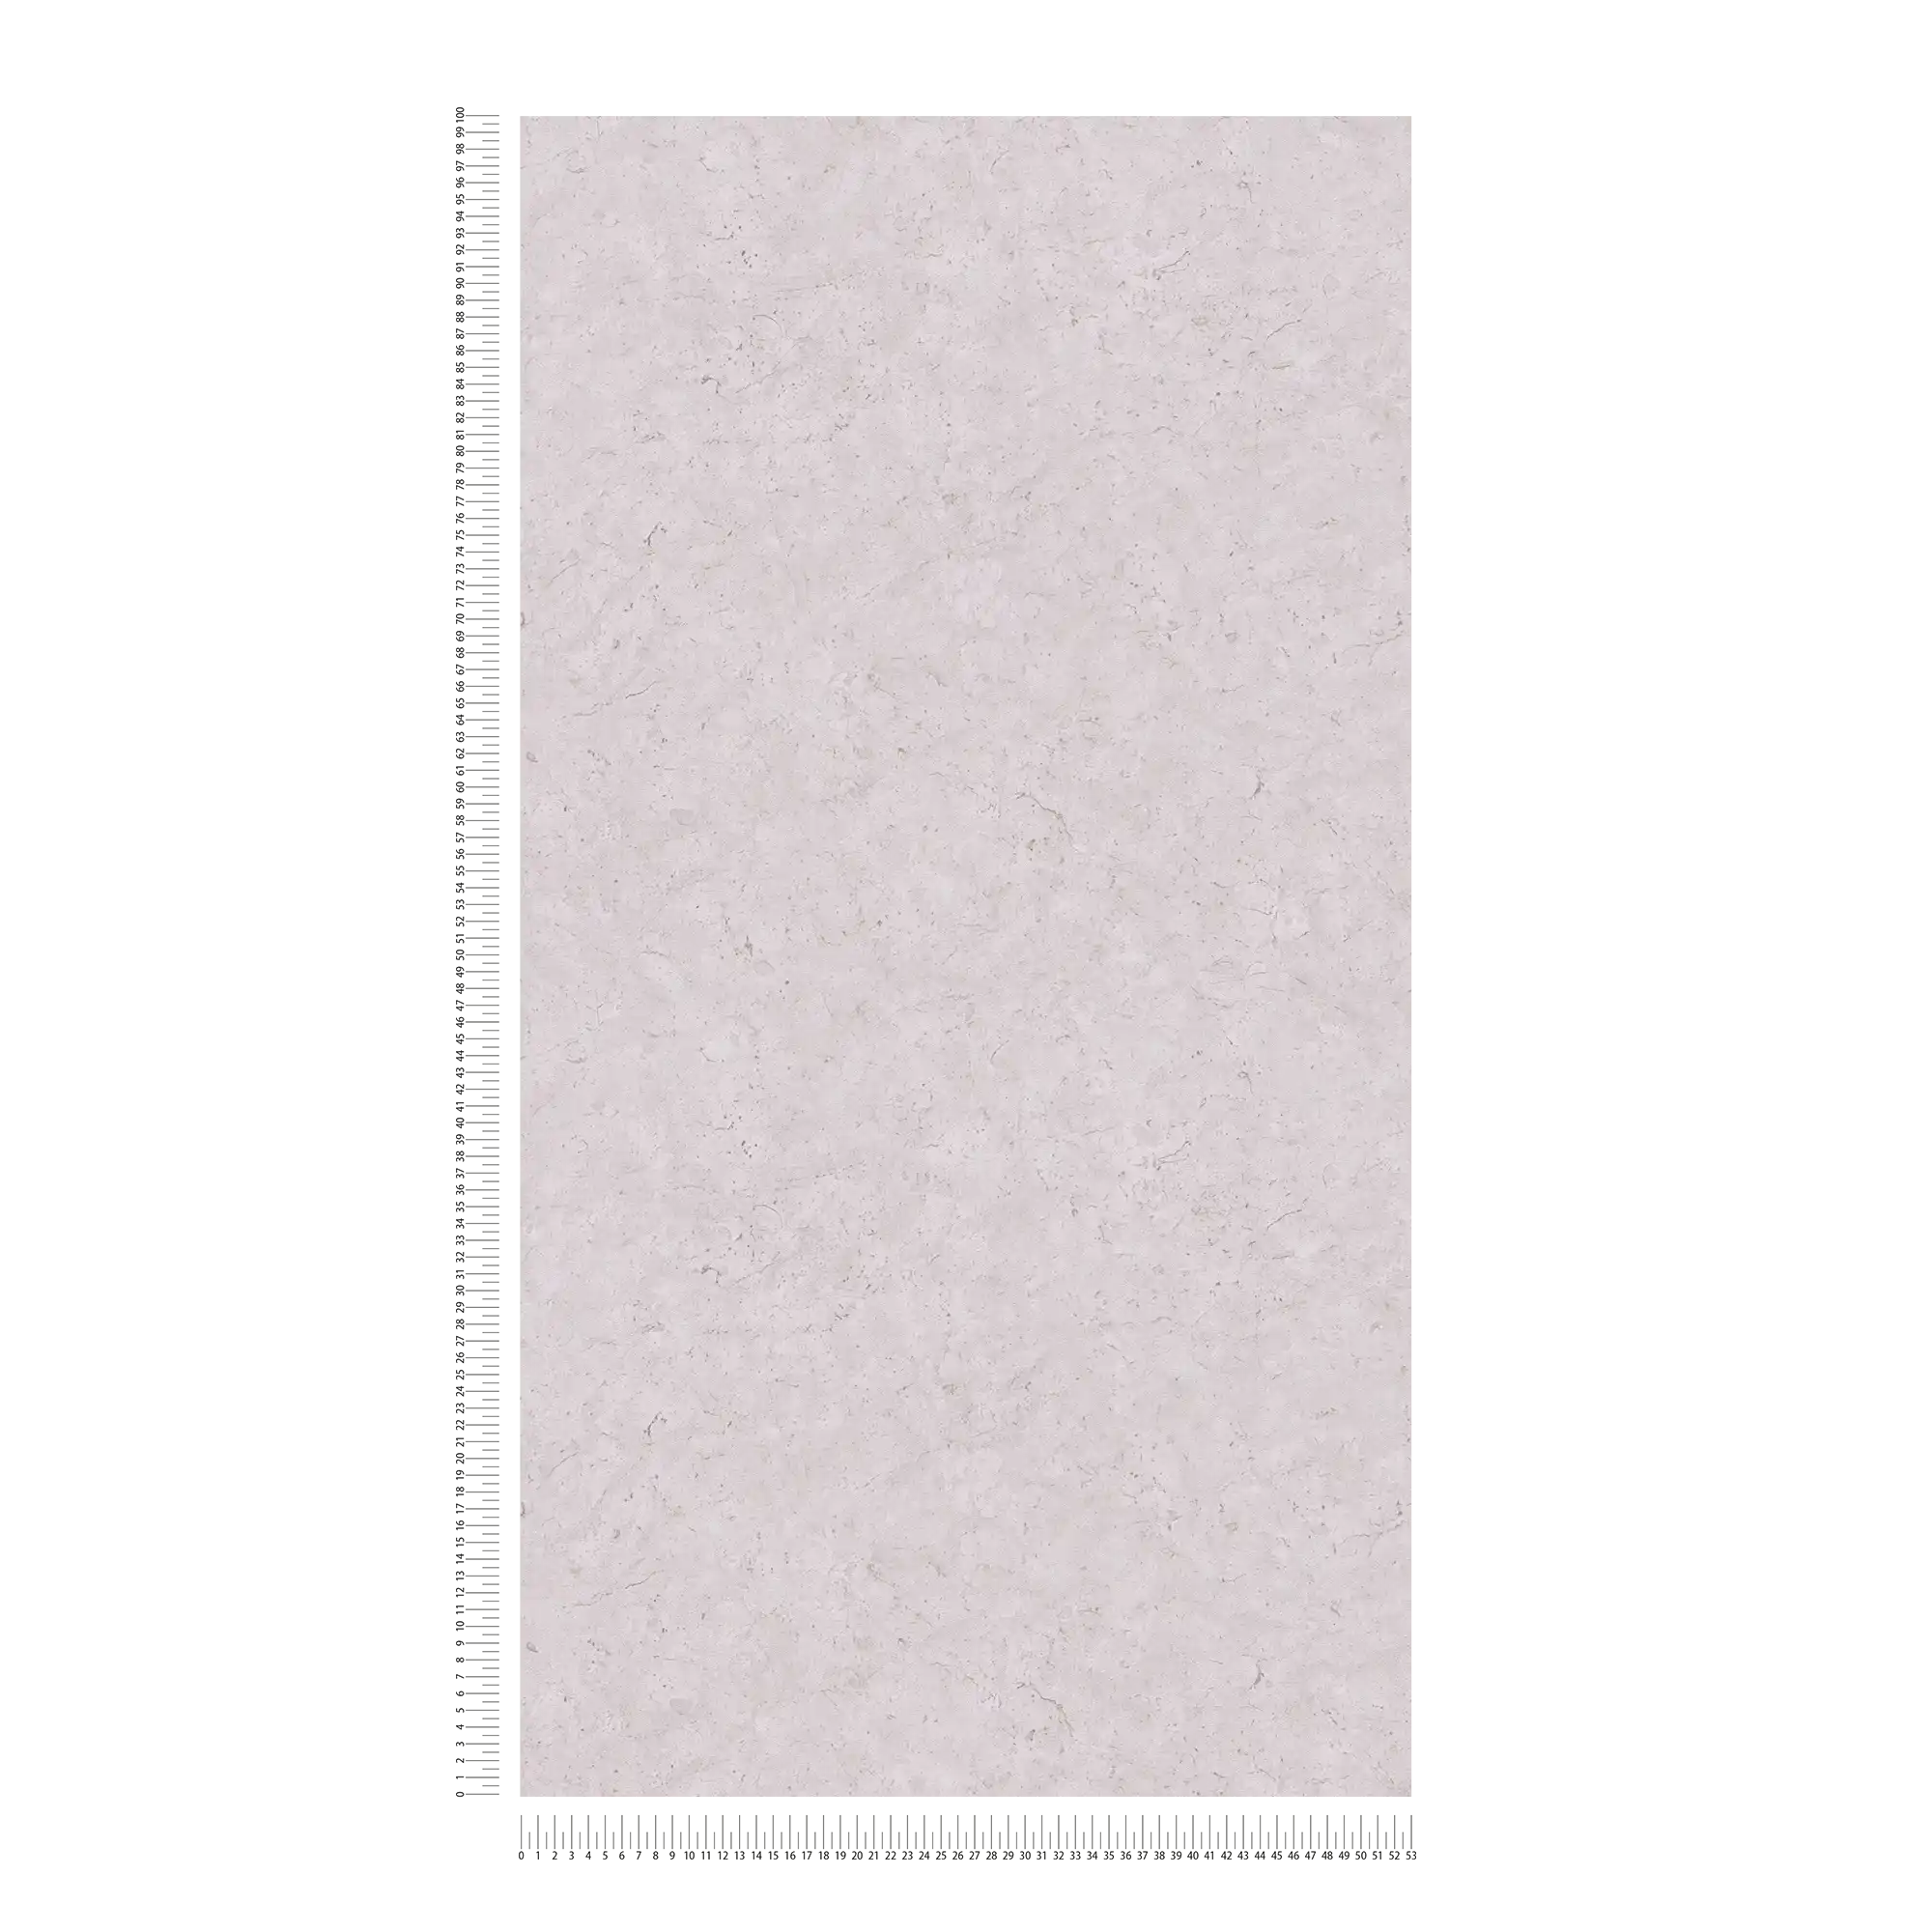             Einfarbige Vliestapete mit Betonoptik – Grau
        